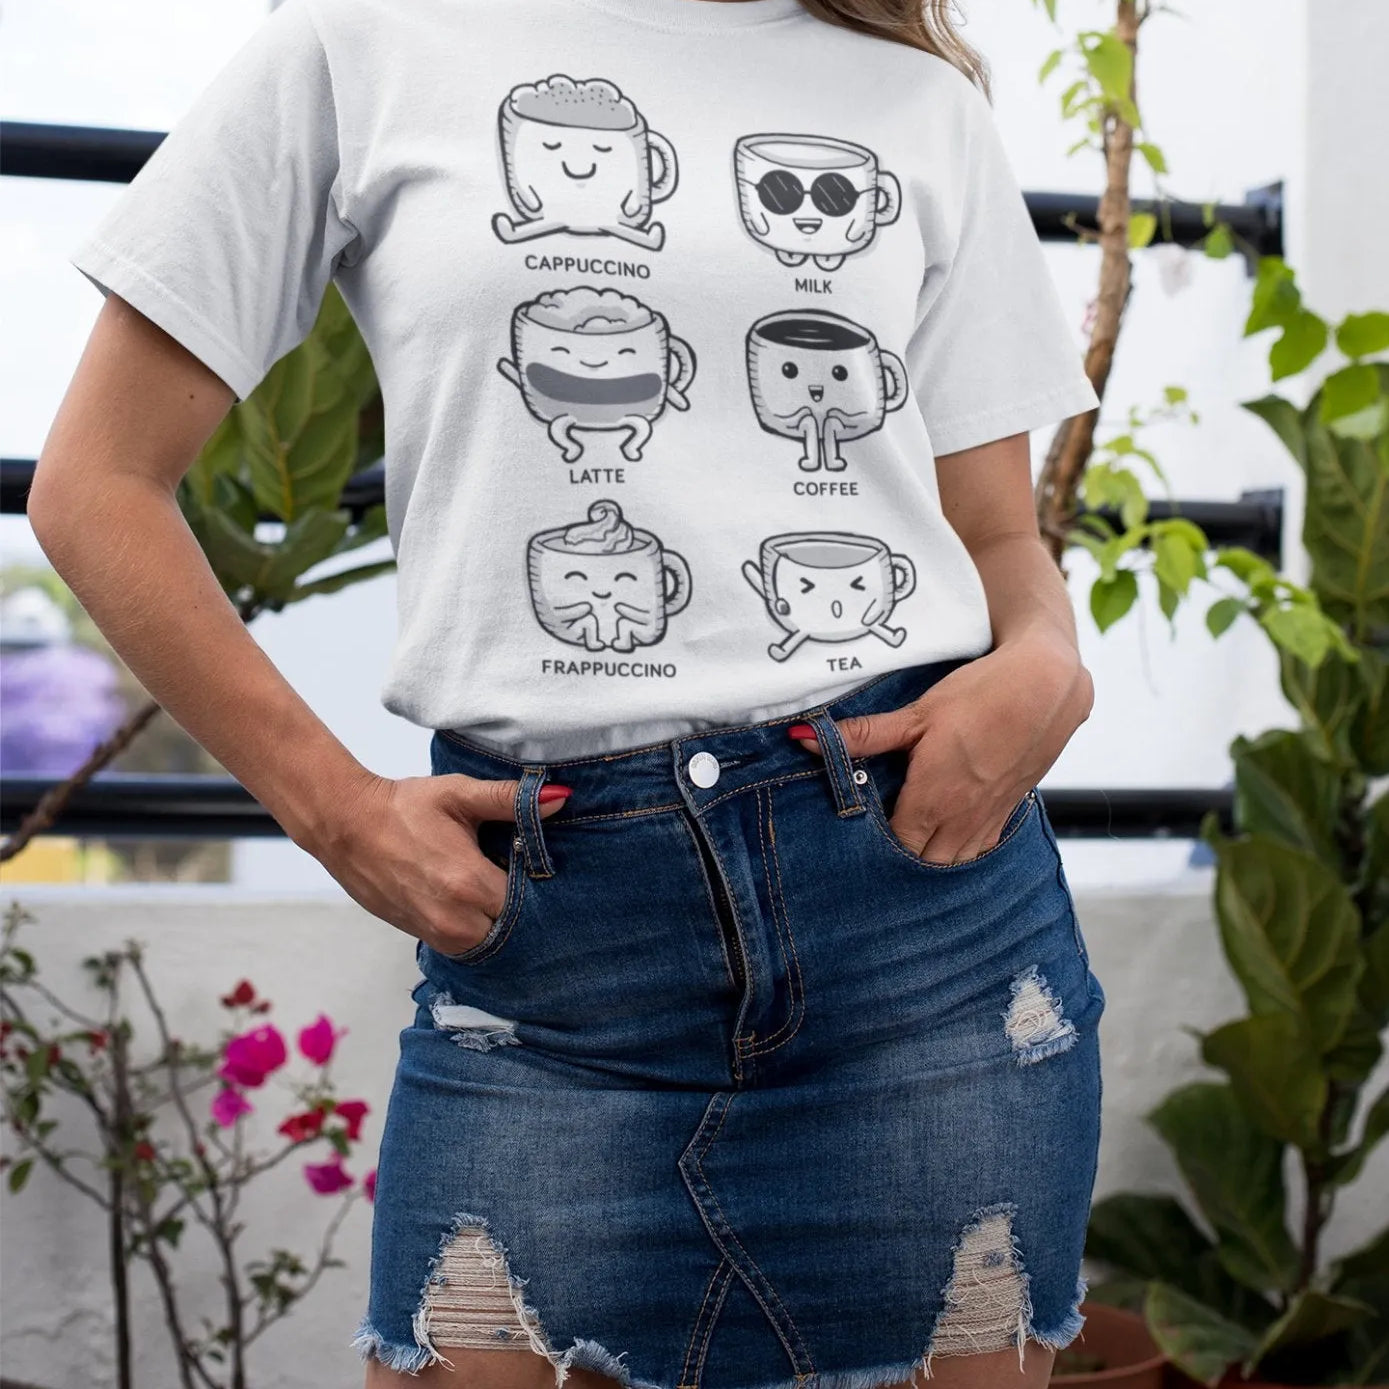 Hire an Artist - Print Me Shirts